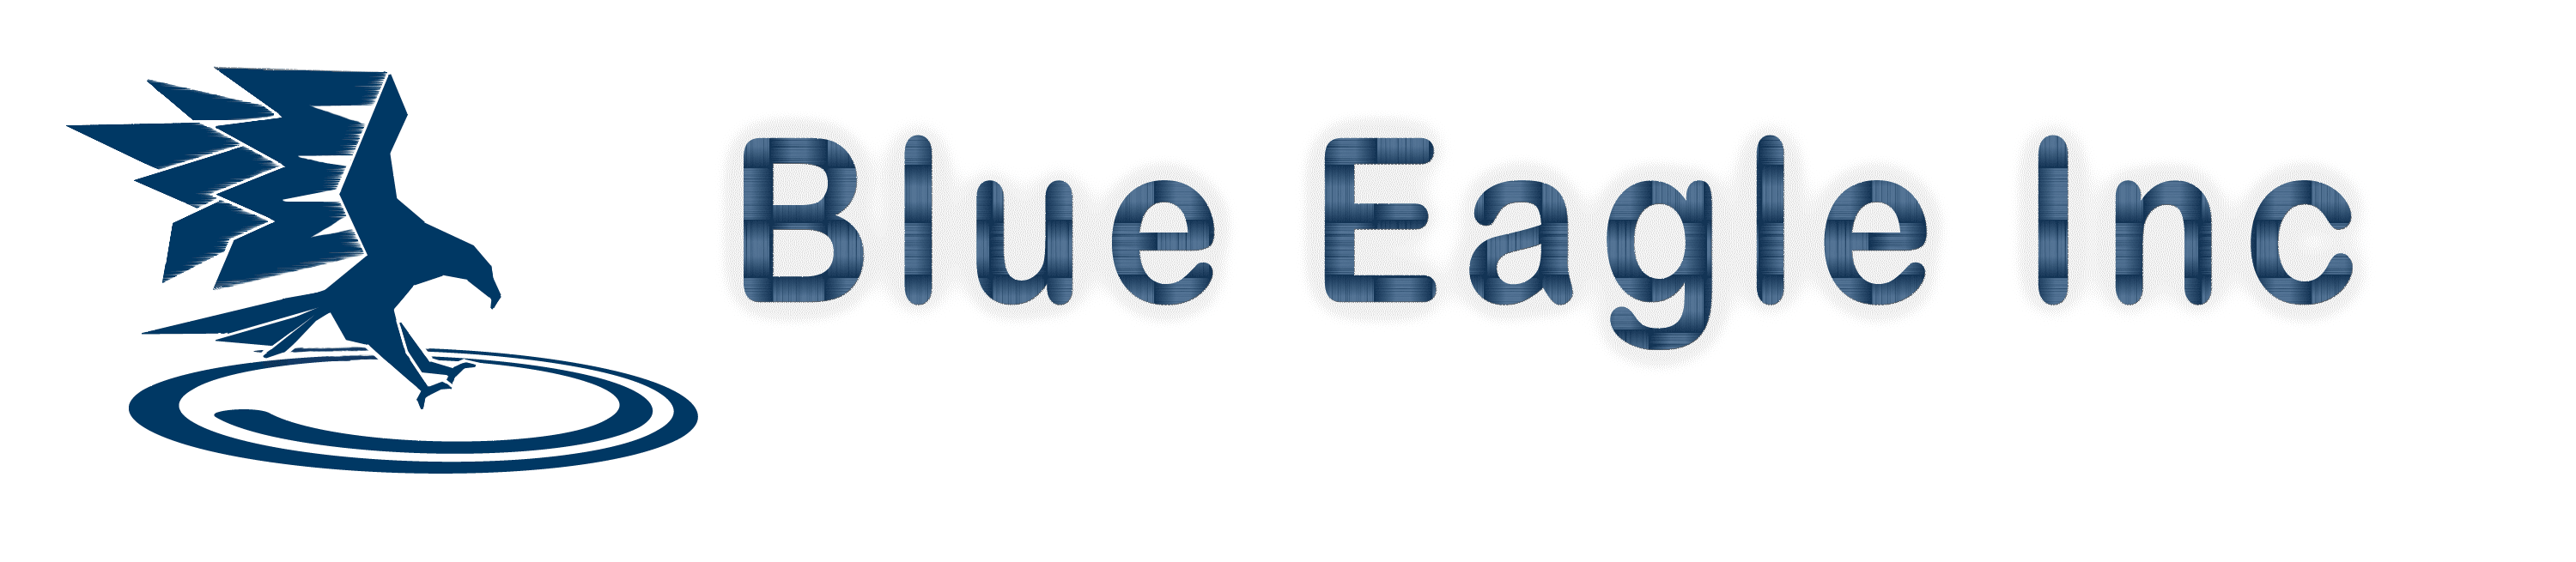 Blue Eagle Company Logo - Home Eagle Inc